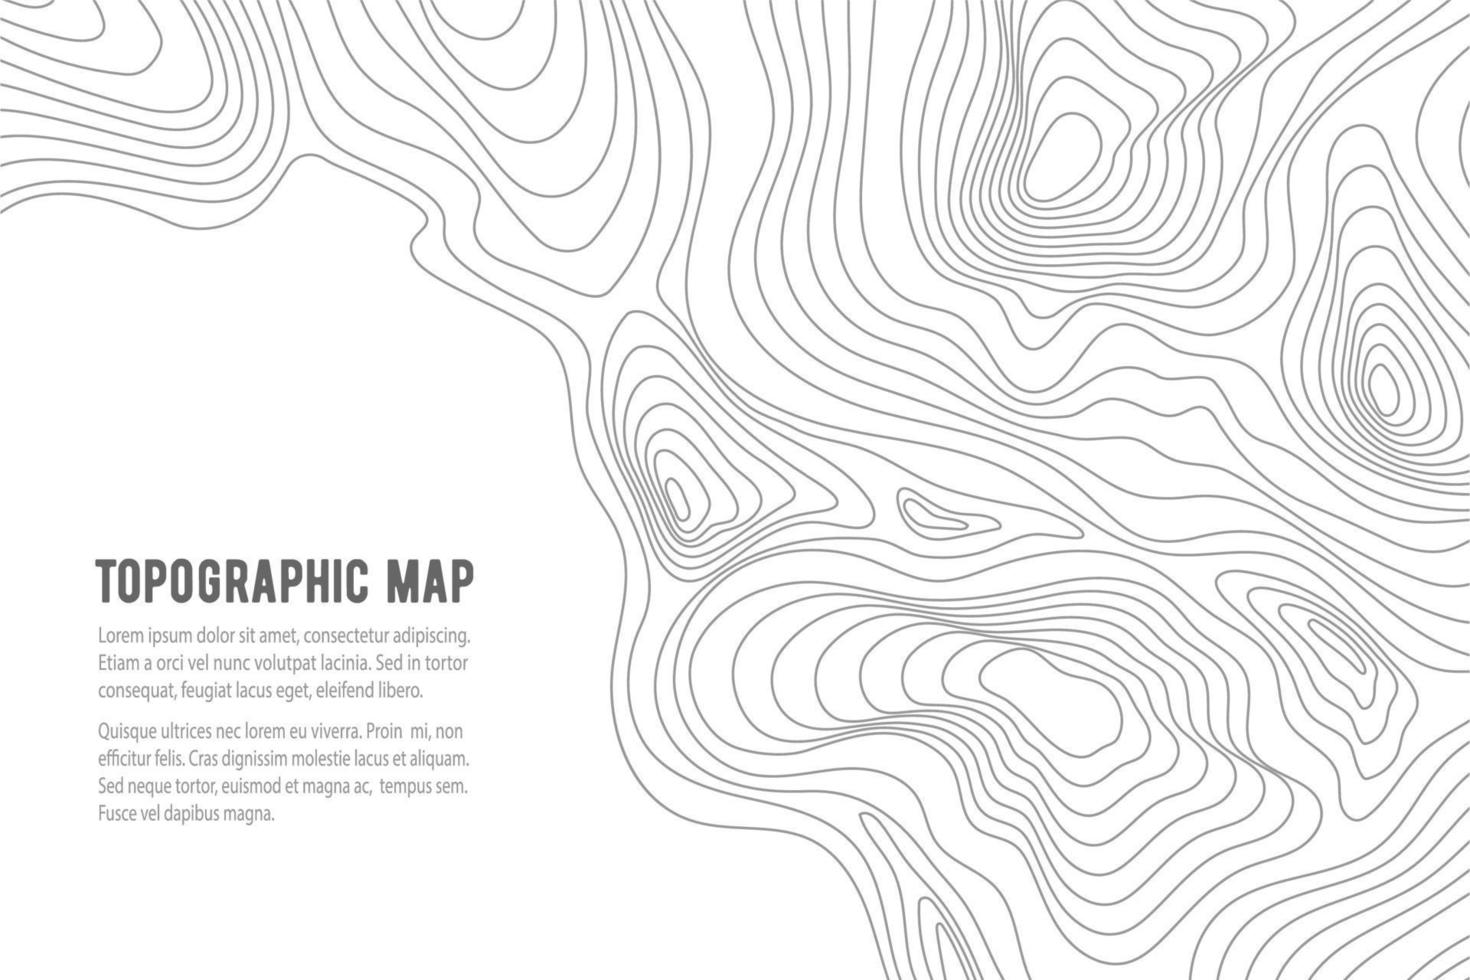 Topographic map, grid, texture, relief contour vector